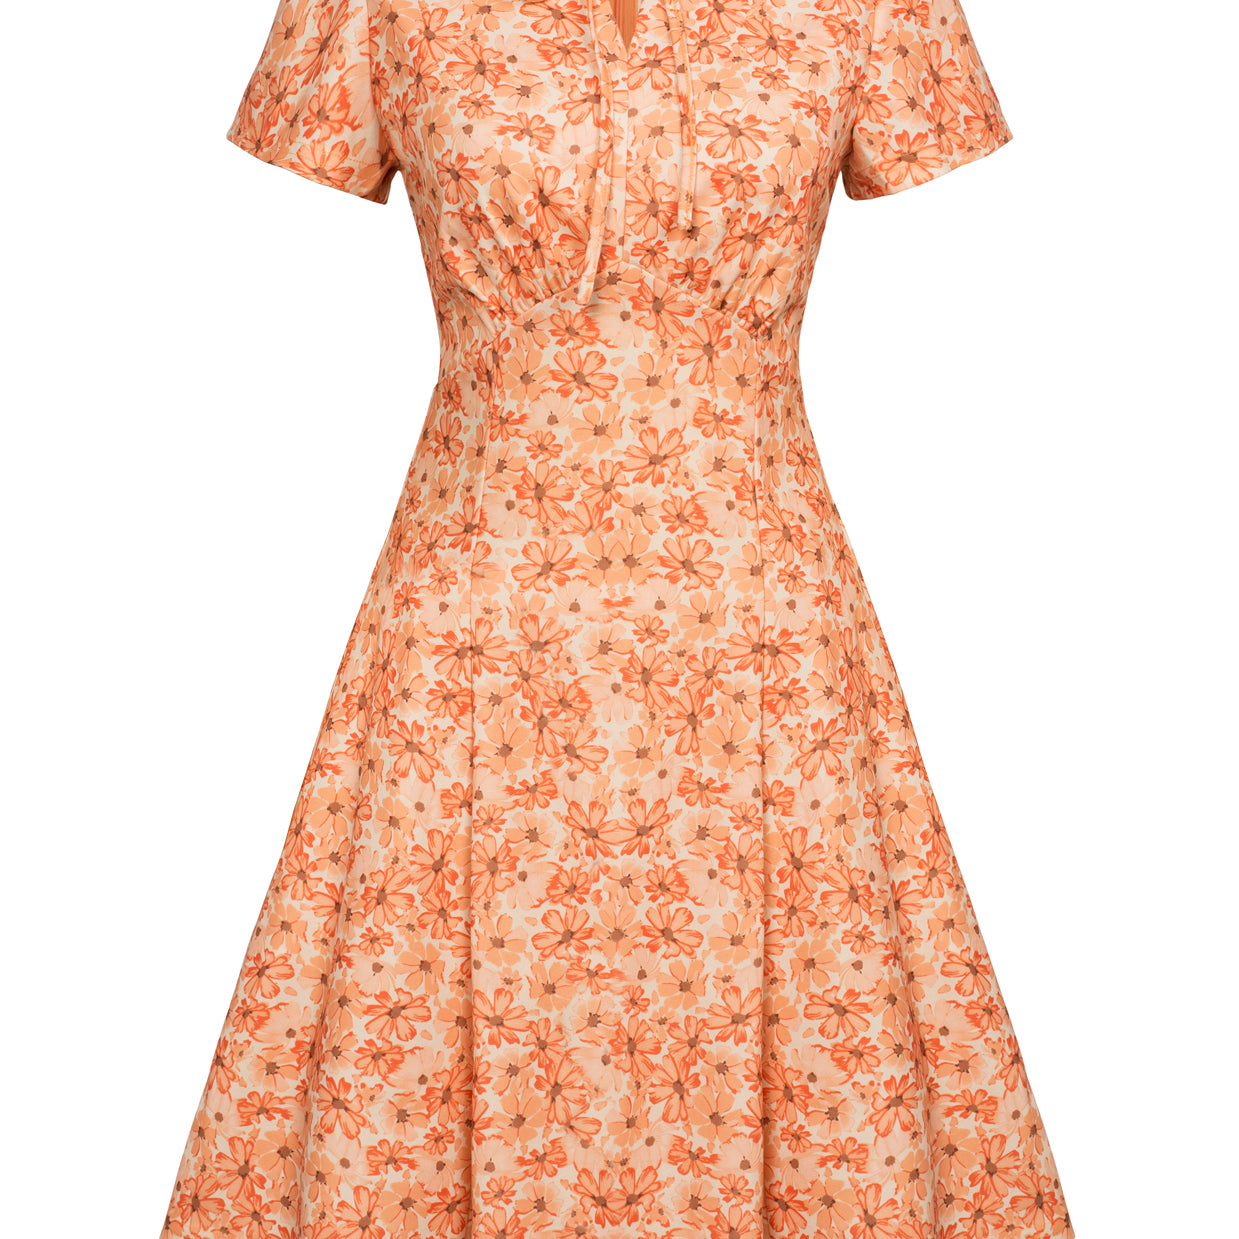 Vintage A-Line Swing Dress